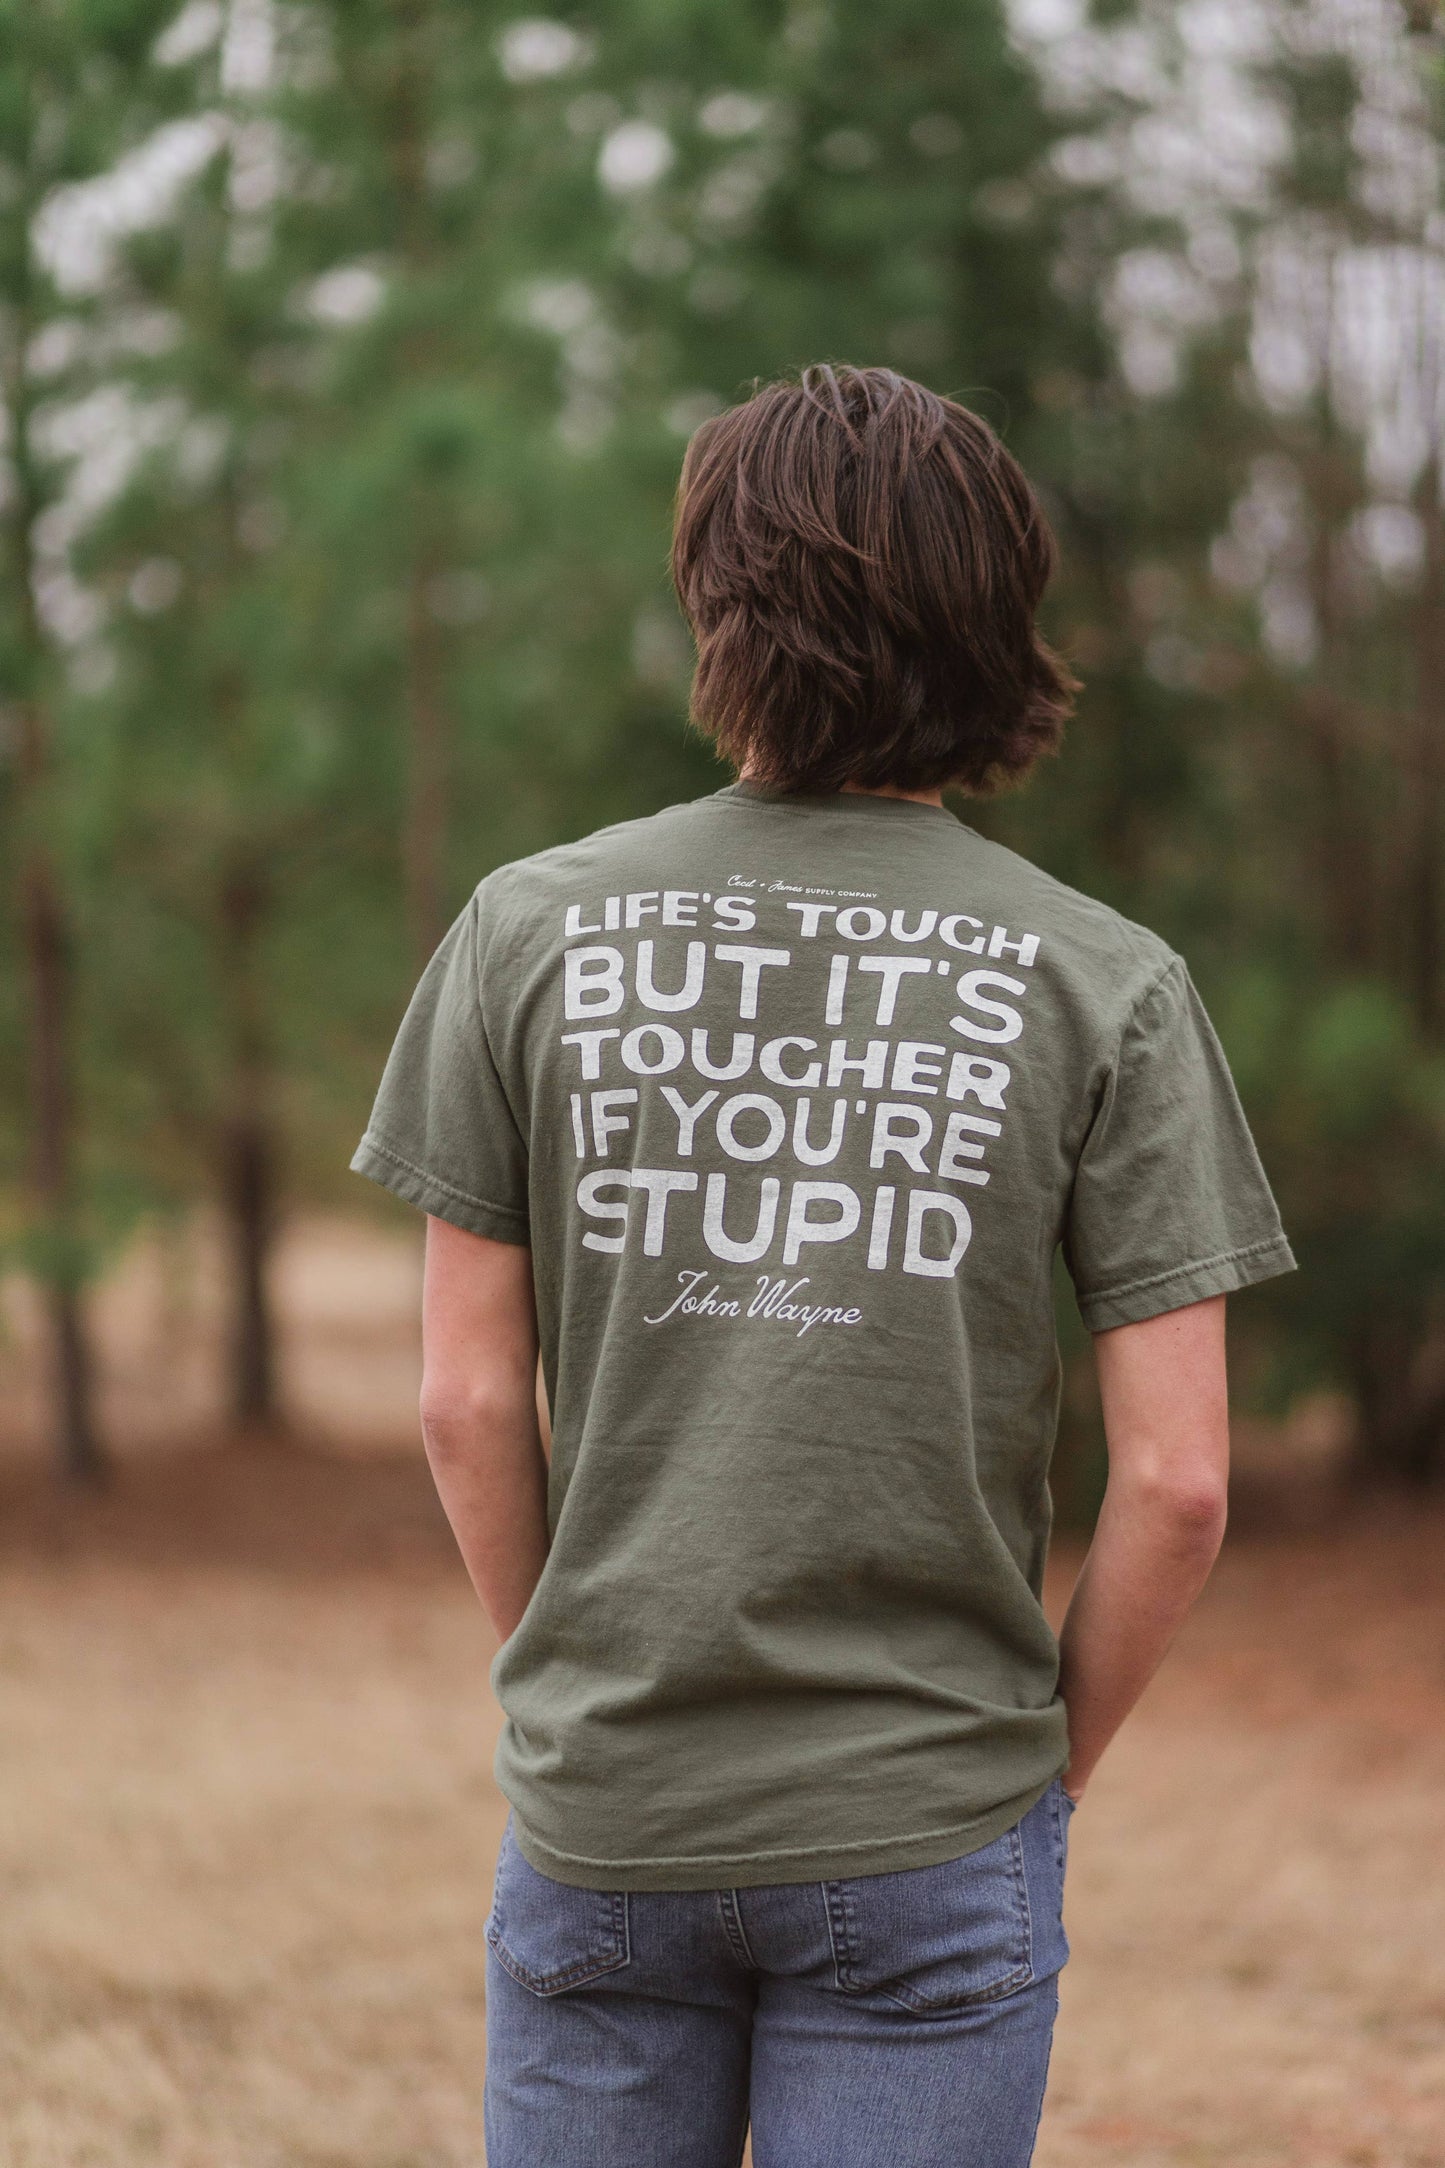 Tougher If You're Stupid T-shirt